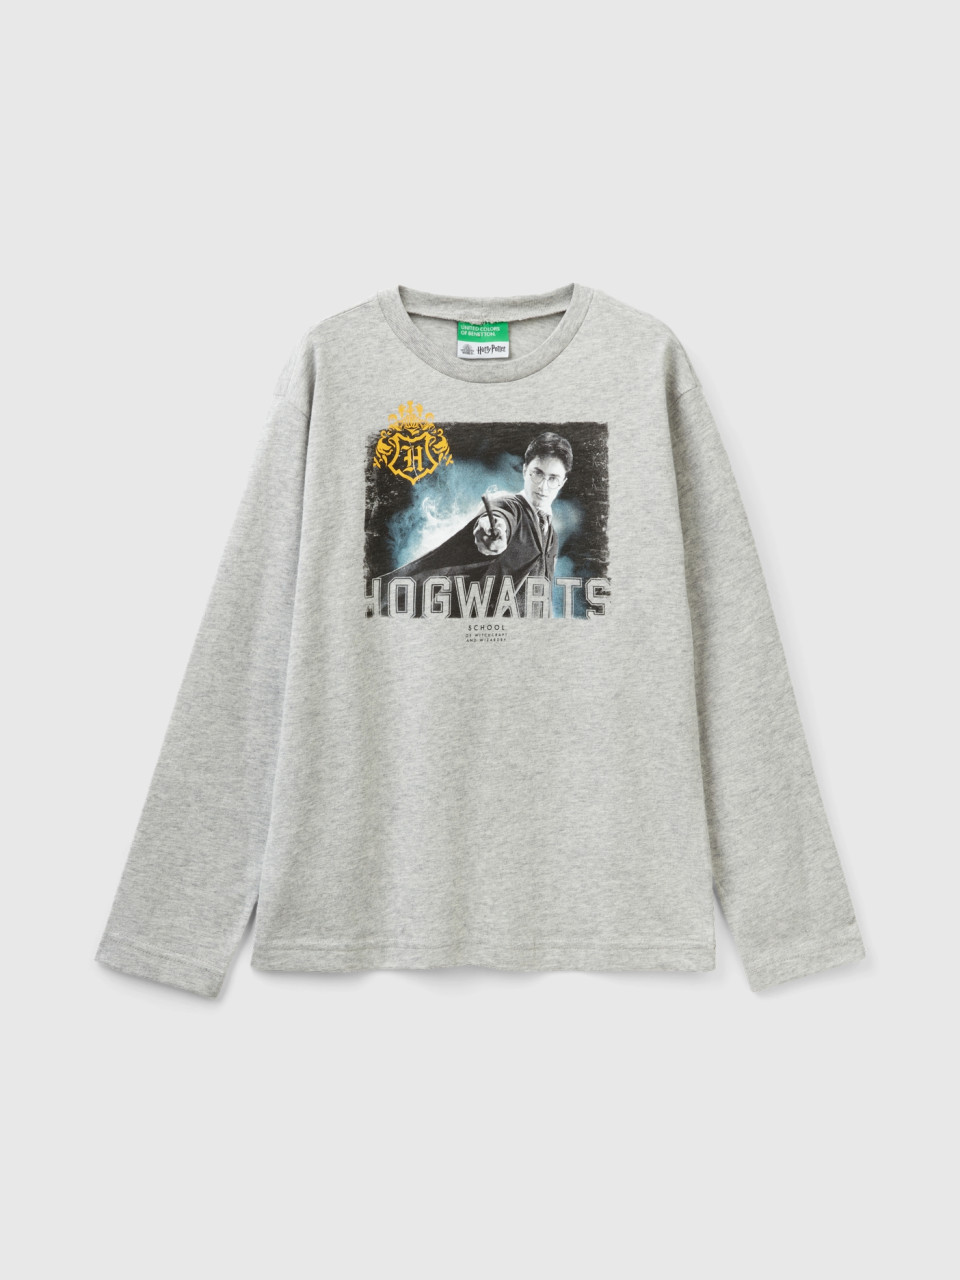 Benetton, Long Sleeve Harry Potter T-shirt, Light Gray, Kids